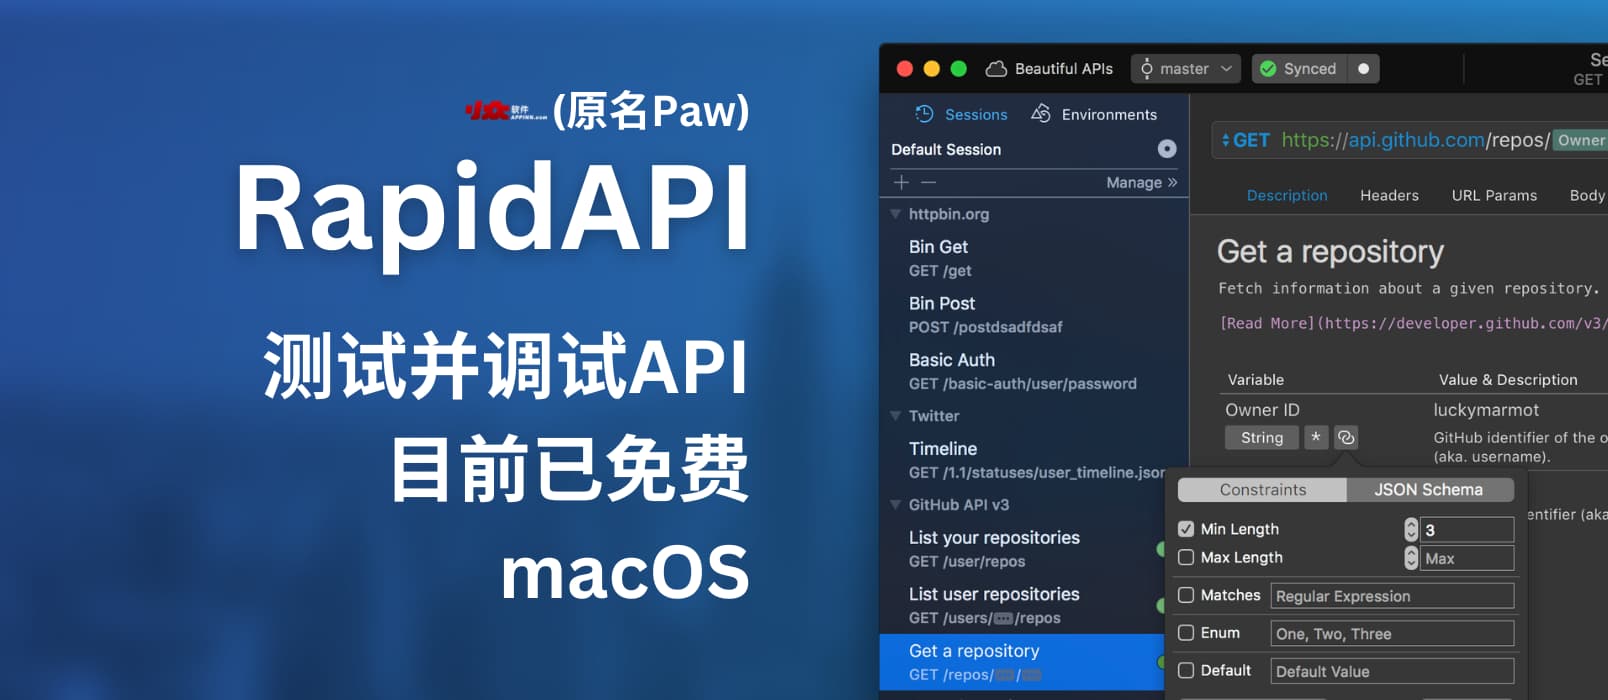 RapidAPI - 原名 Paw，用于测试并调试 API，目前已免费[macOS]